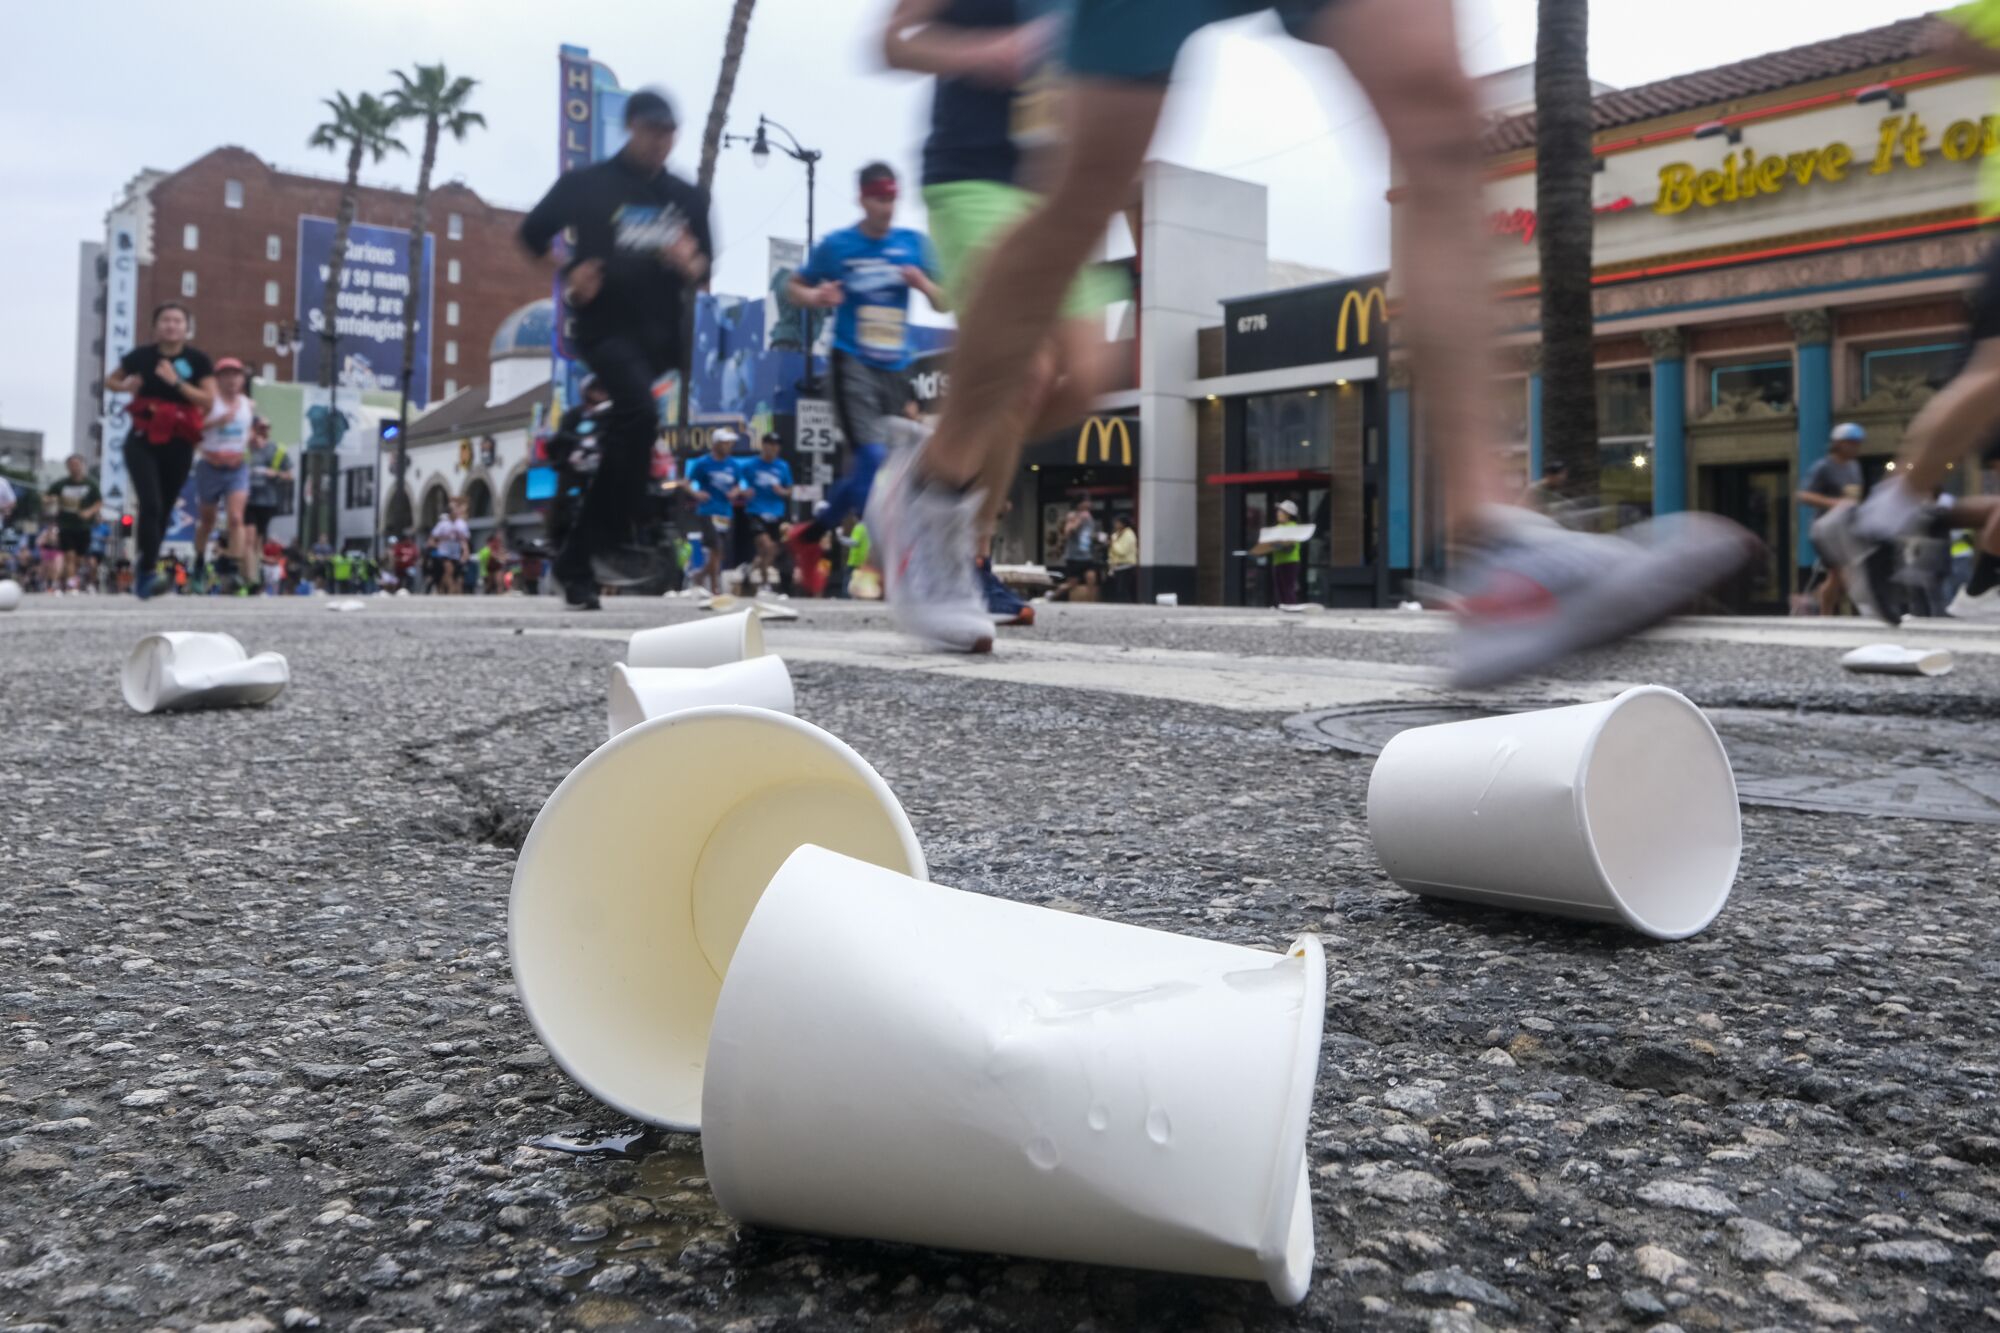 Water cups litter the street as runners pass them.